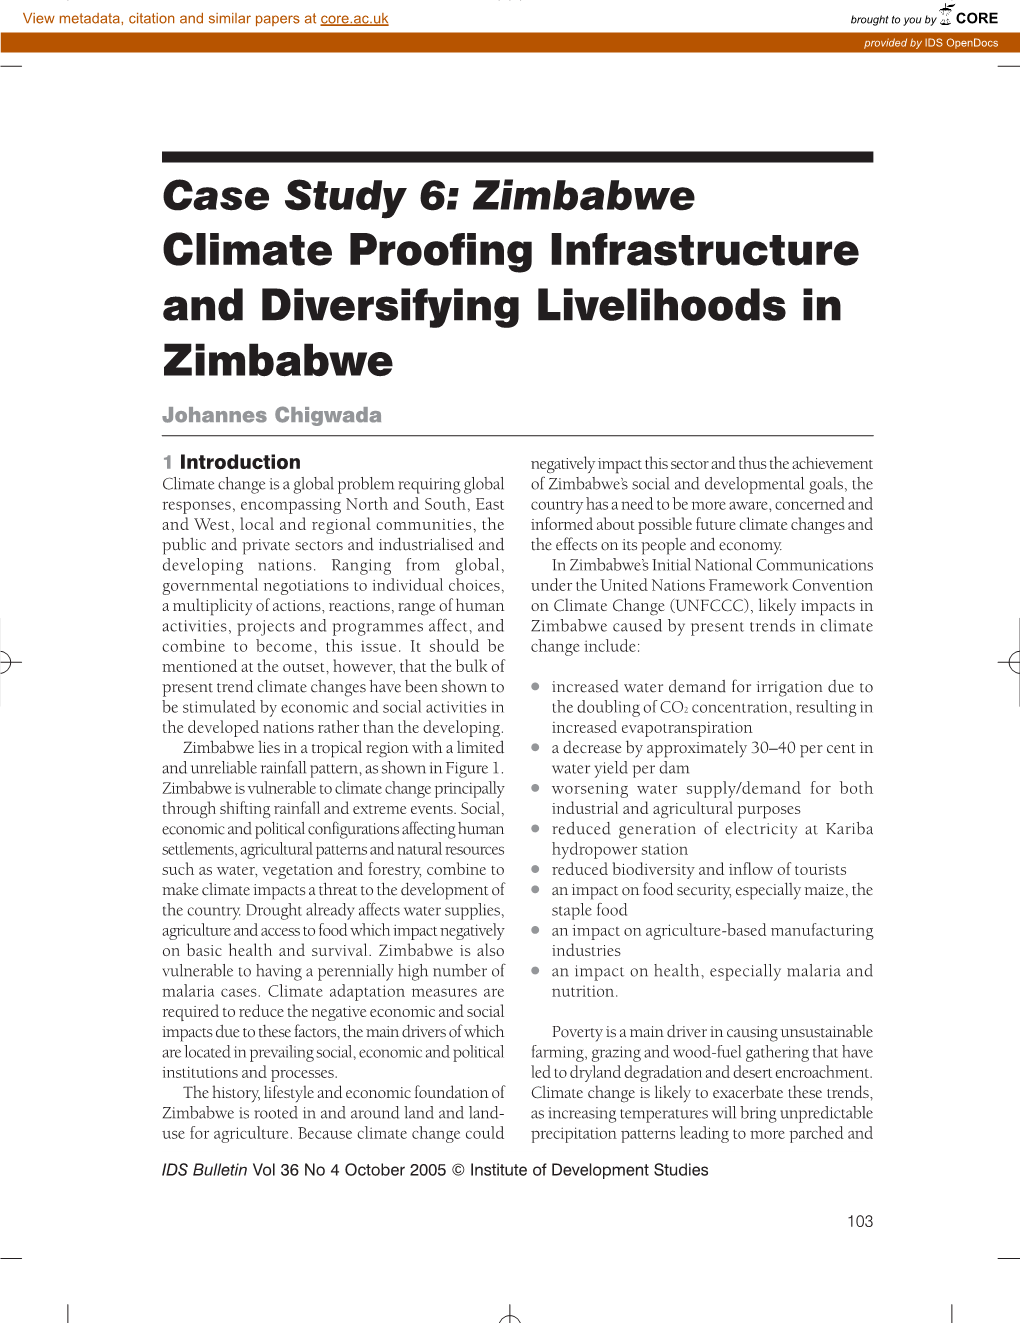 Case Study 6: Zimbabwe Climate Proofing Infrastructure and Diversifying Livelihoods in Zimbabwe